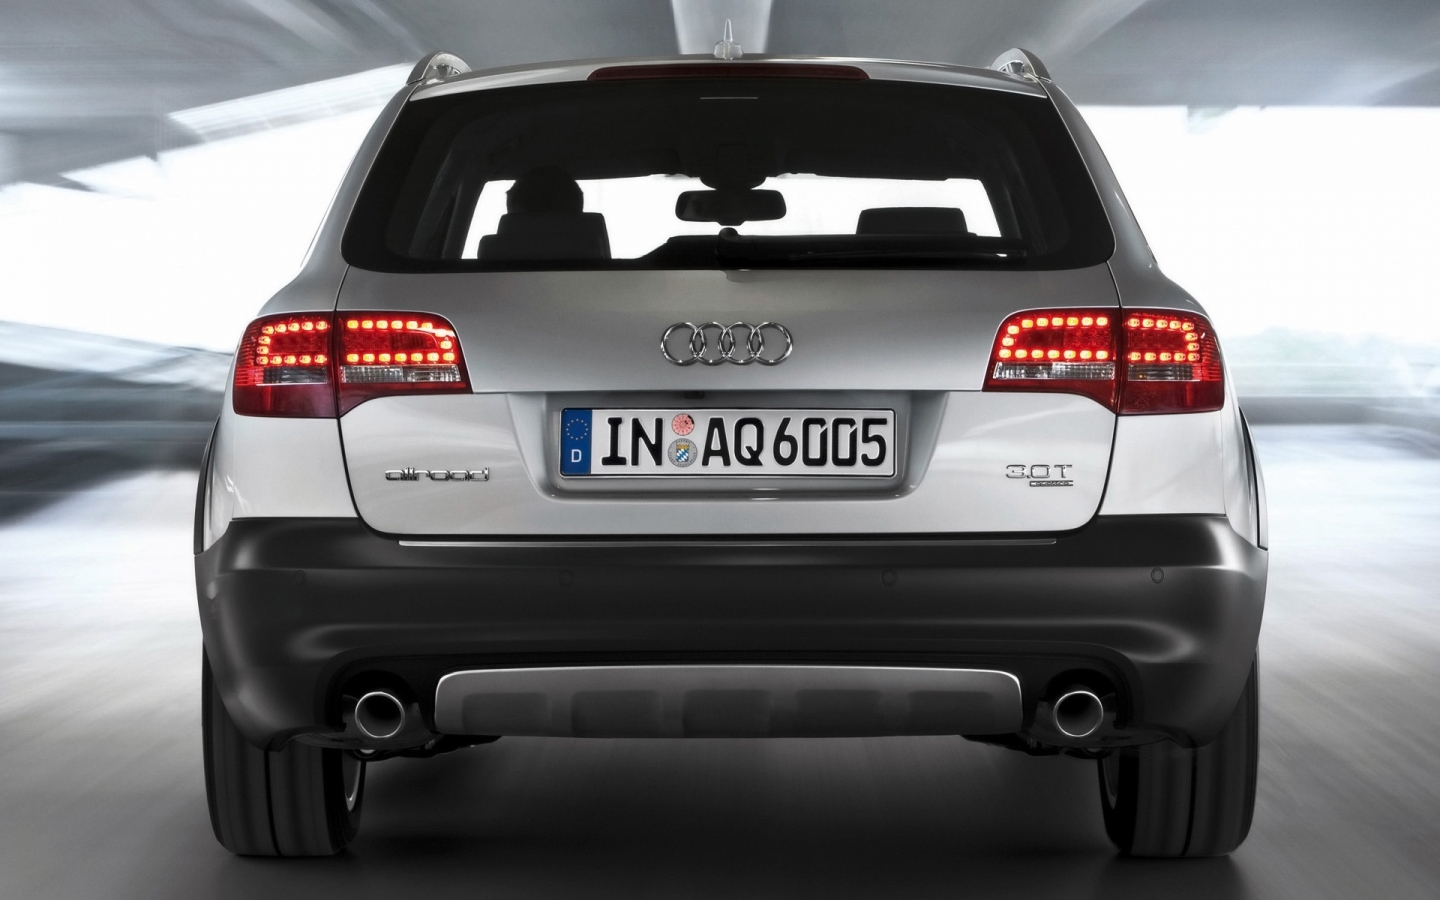 2009 Audi A6 allroad quattro - Rear Speed for 1440 x 900 widescreen resolution